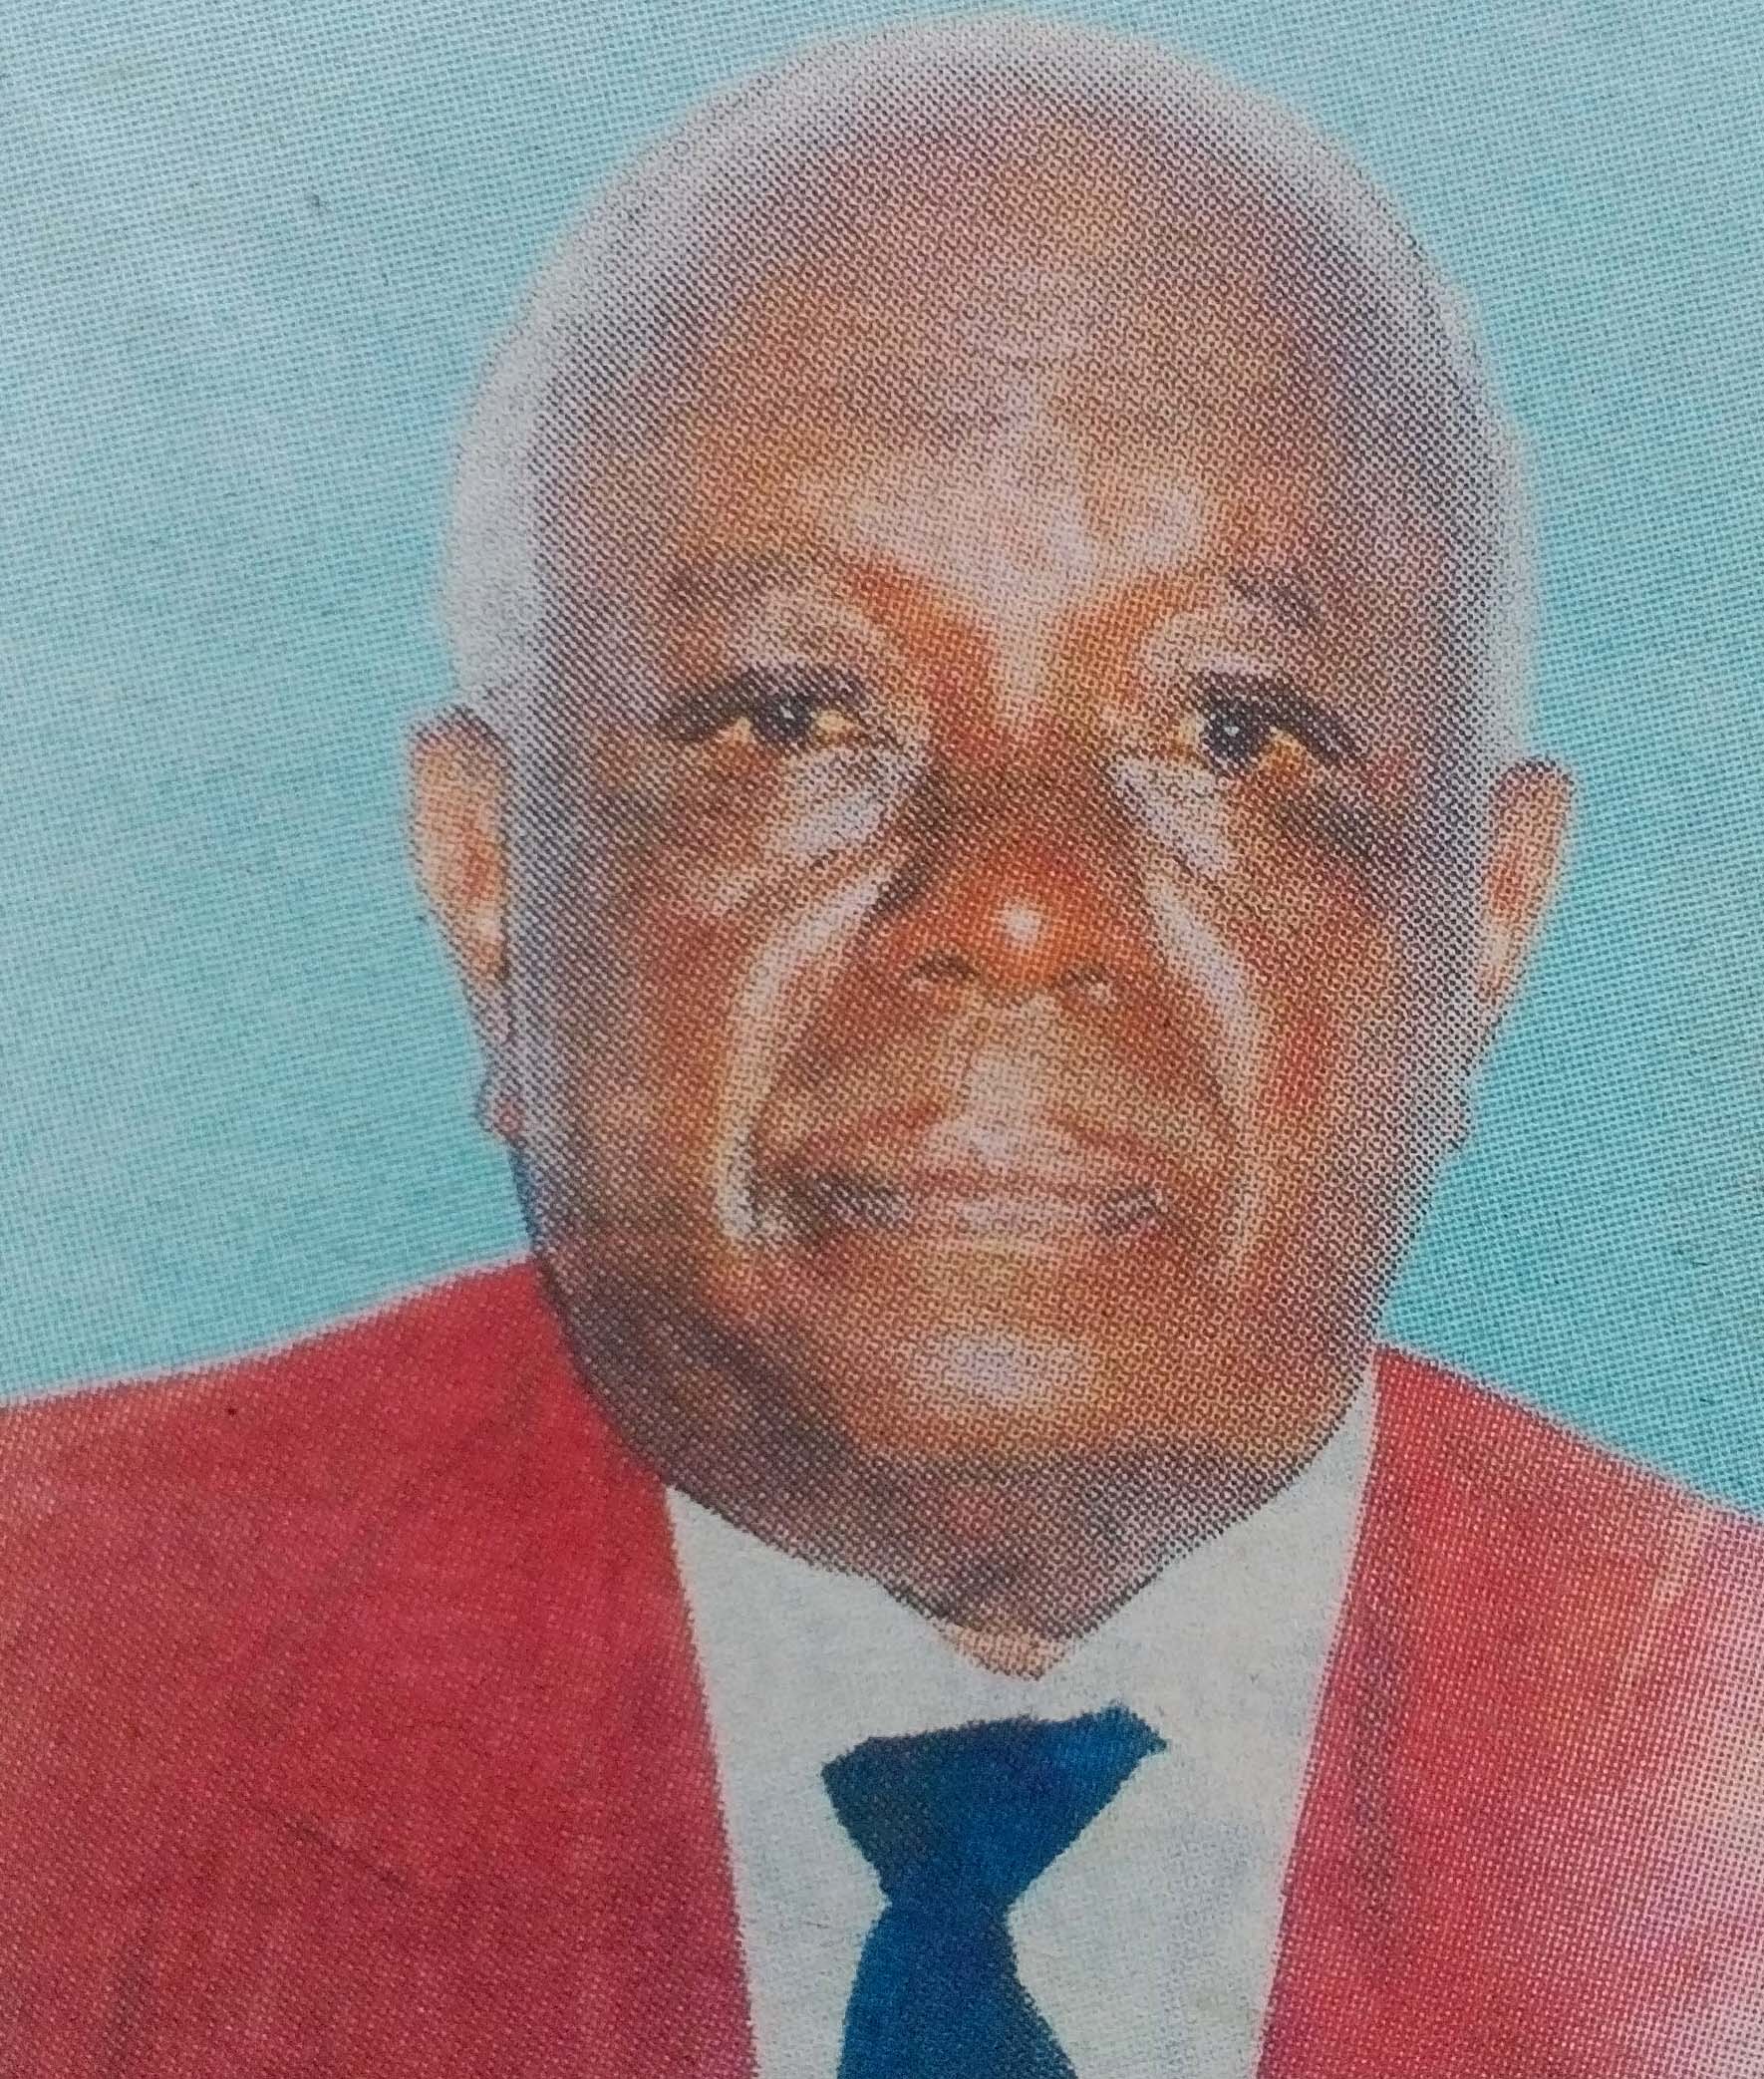 Obituary Image of Mwalimu Isaac Wainaina Ngacha